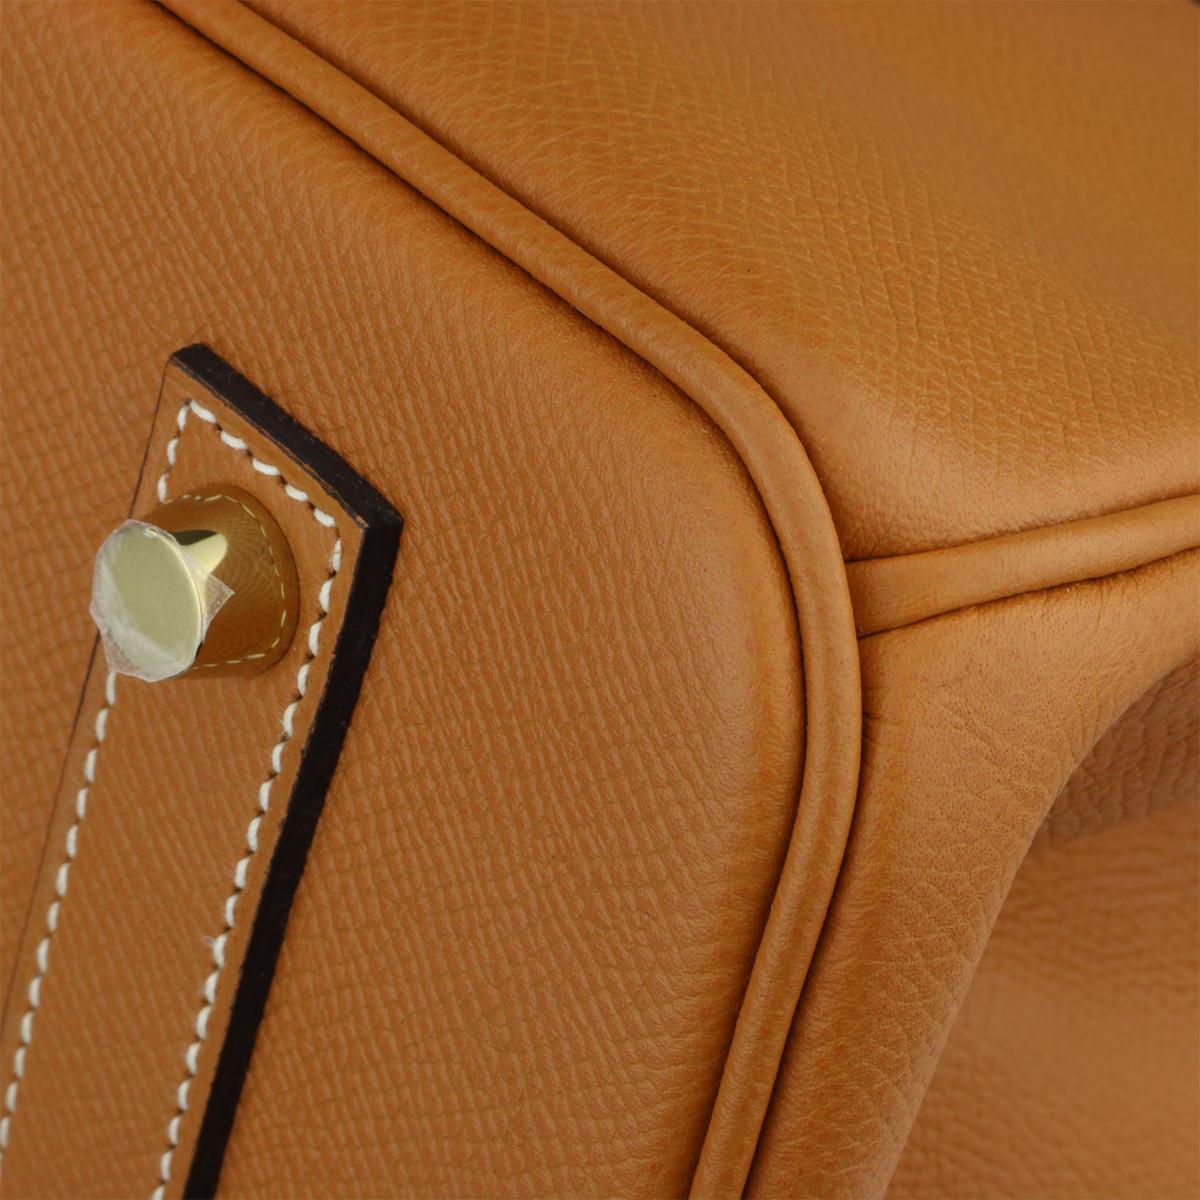 Hermès Birkin 35cm Bag Toffee Epsom Leather with Gold Hardware Stamp A 2017 1